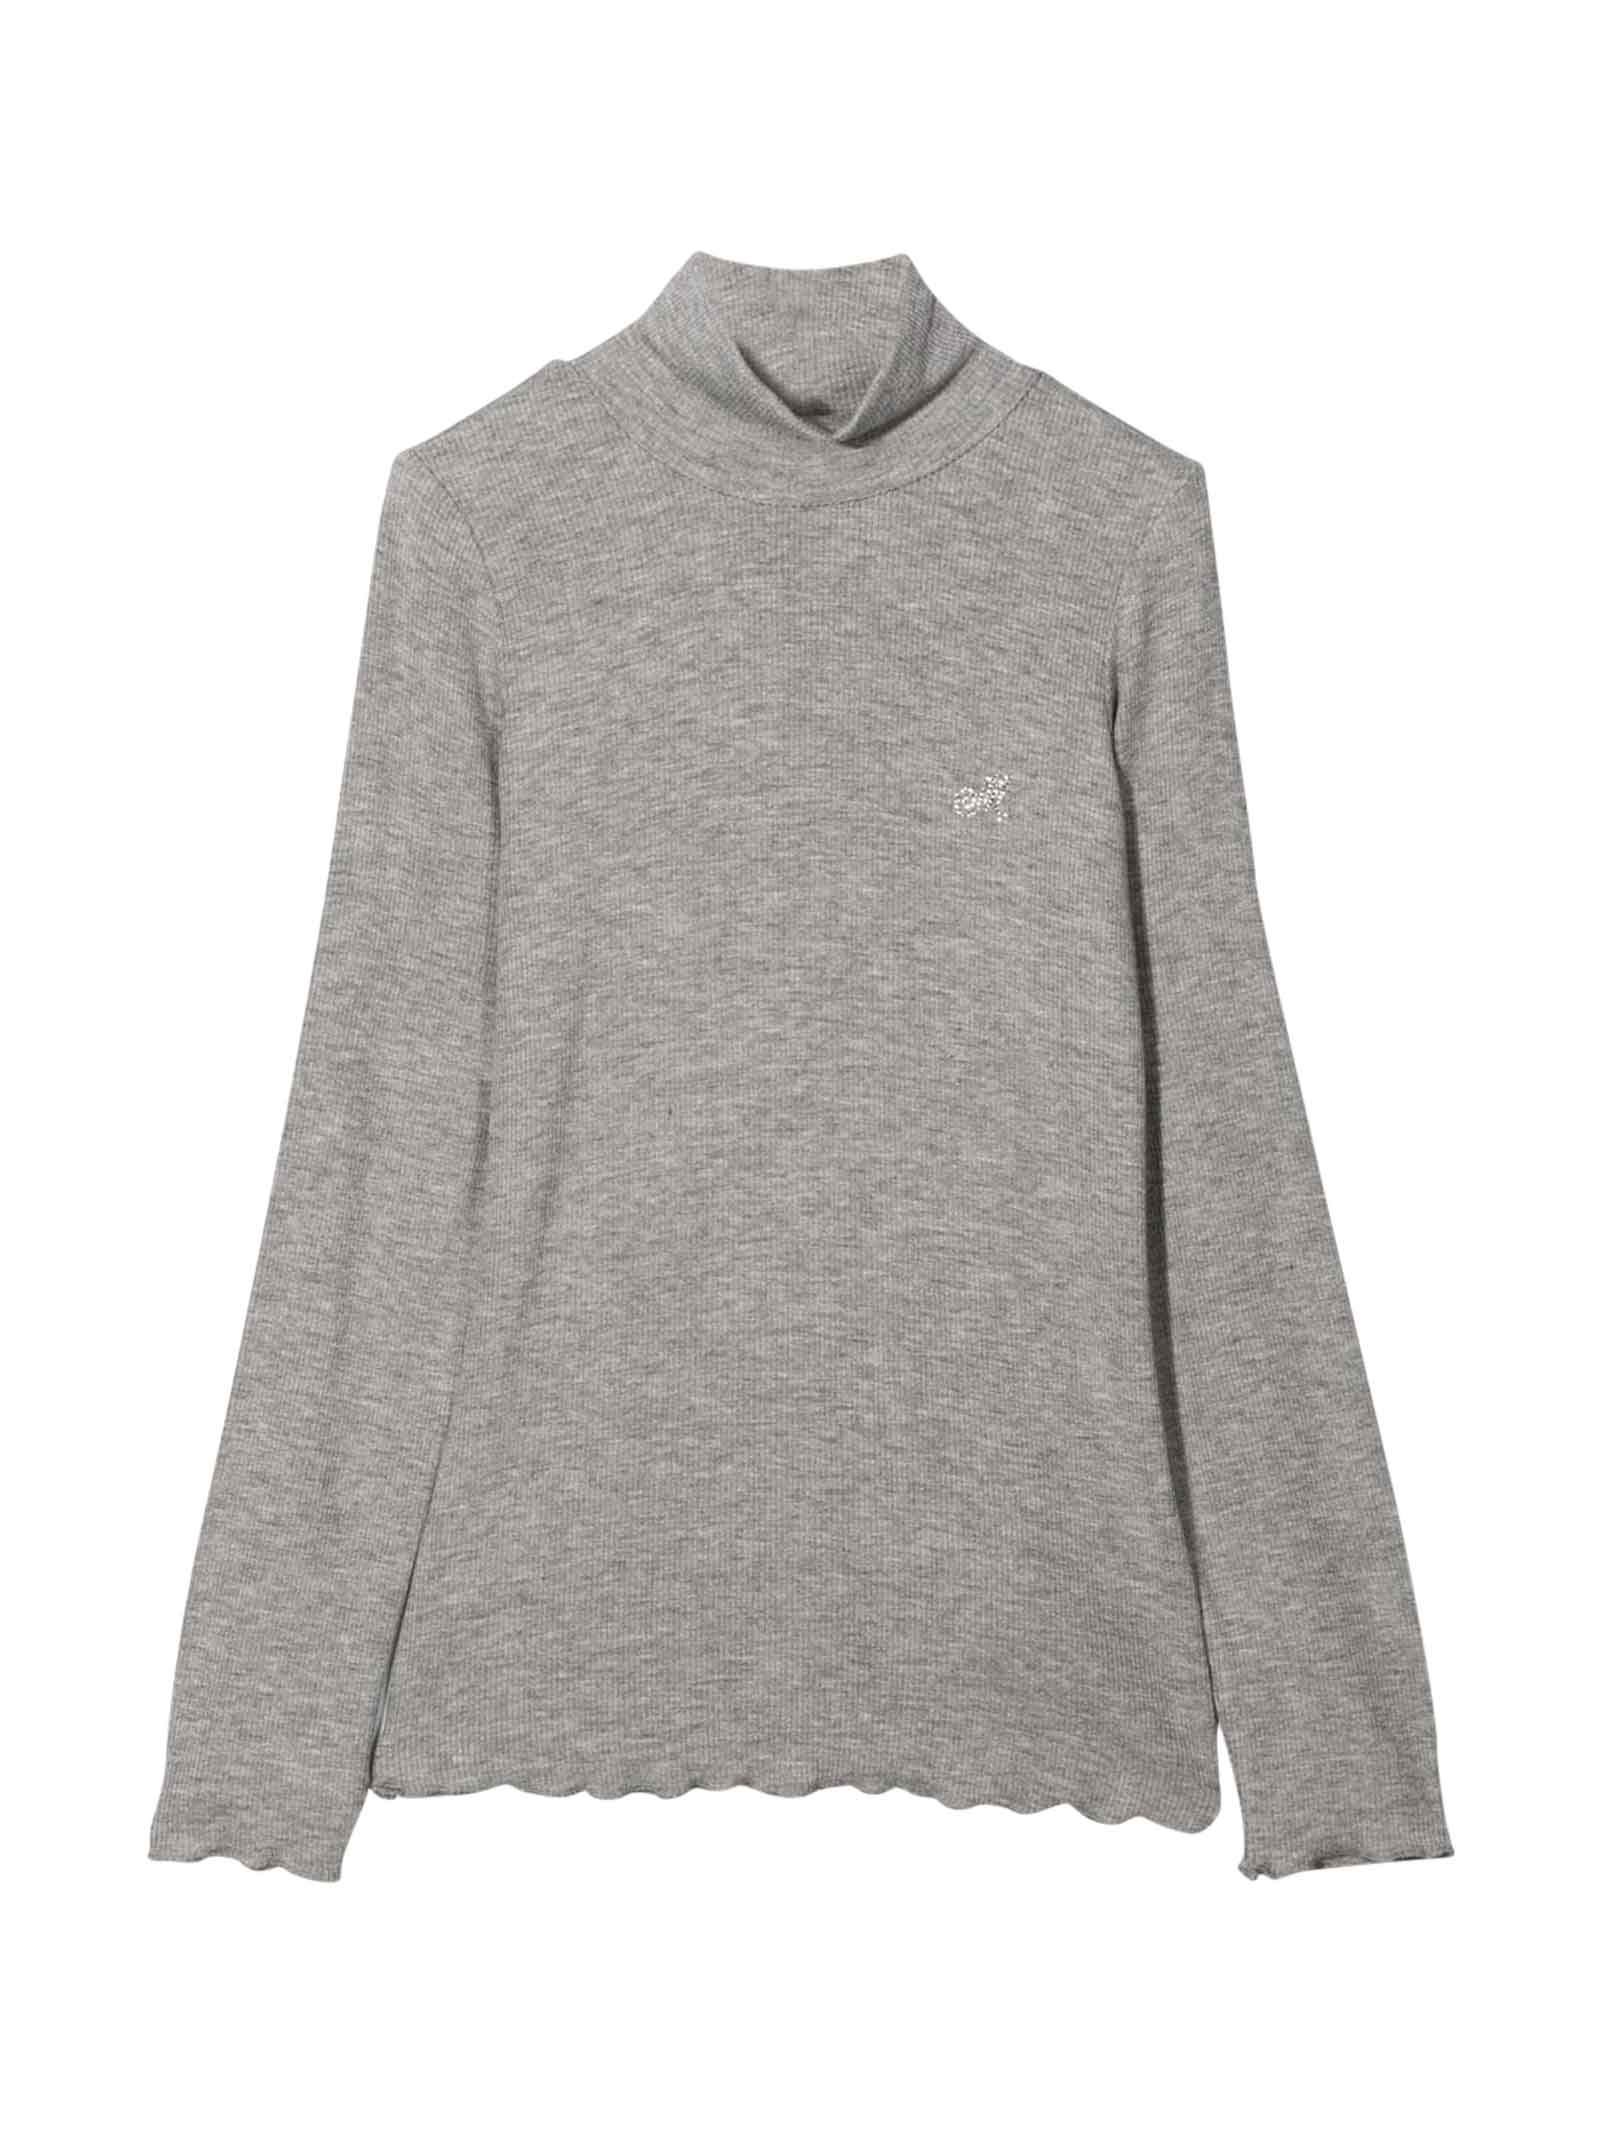 Monnalisa Girl Gray Sweater